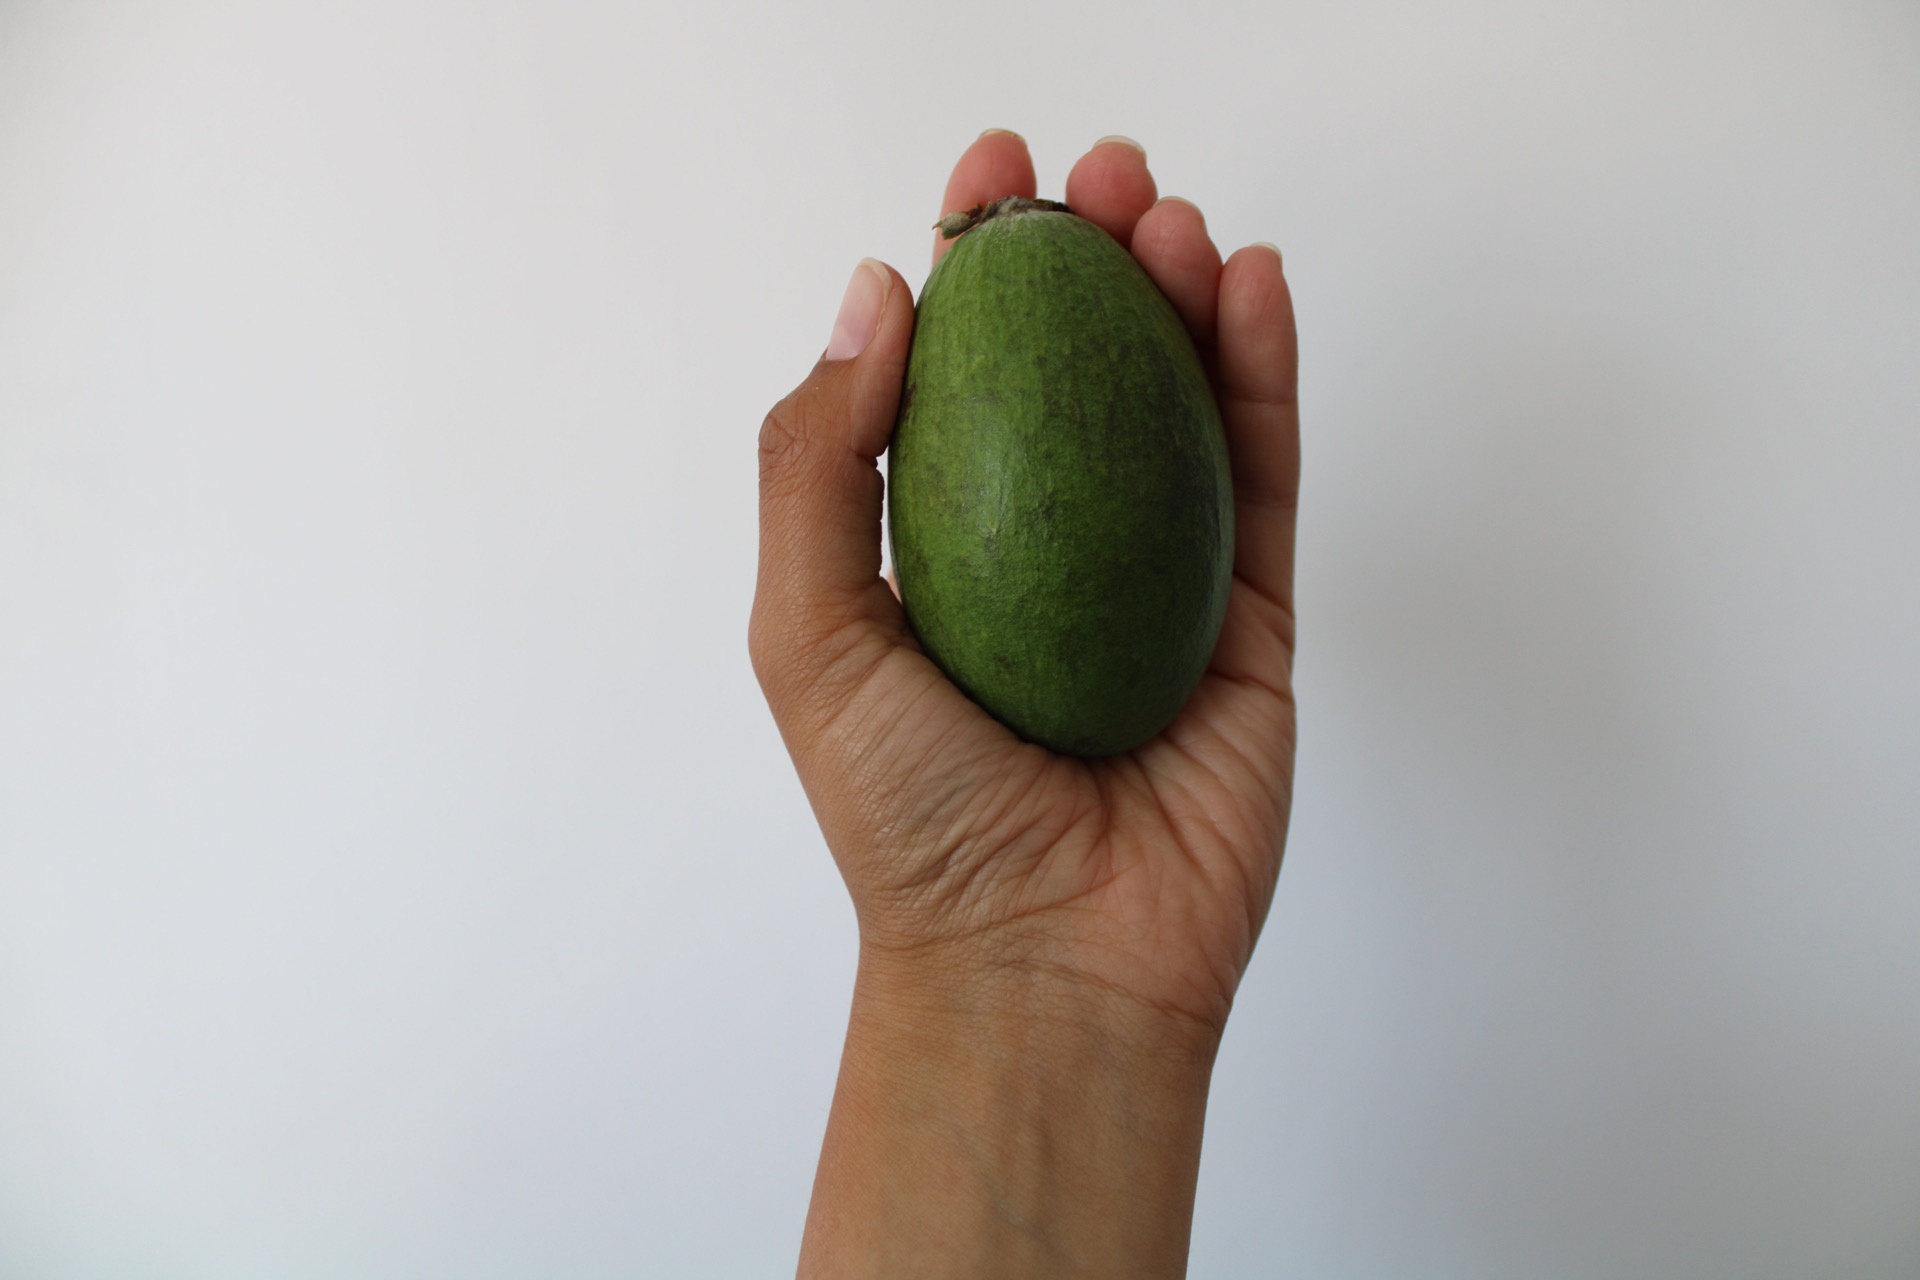 hand holding a green feijoa fruit